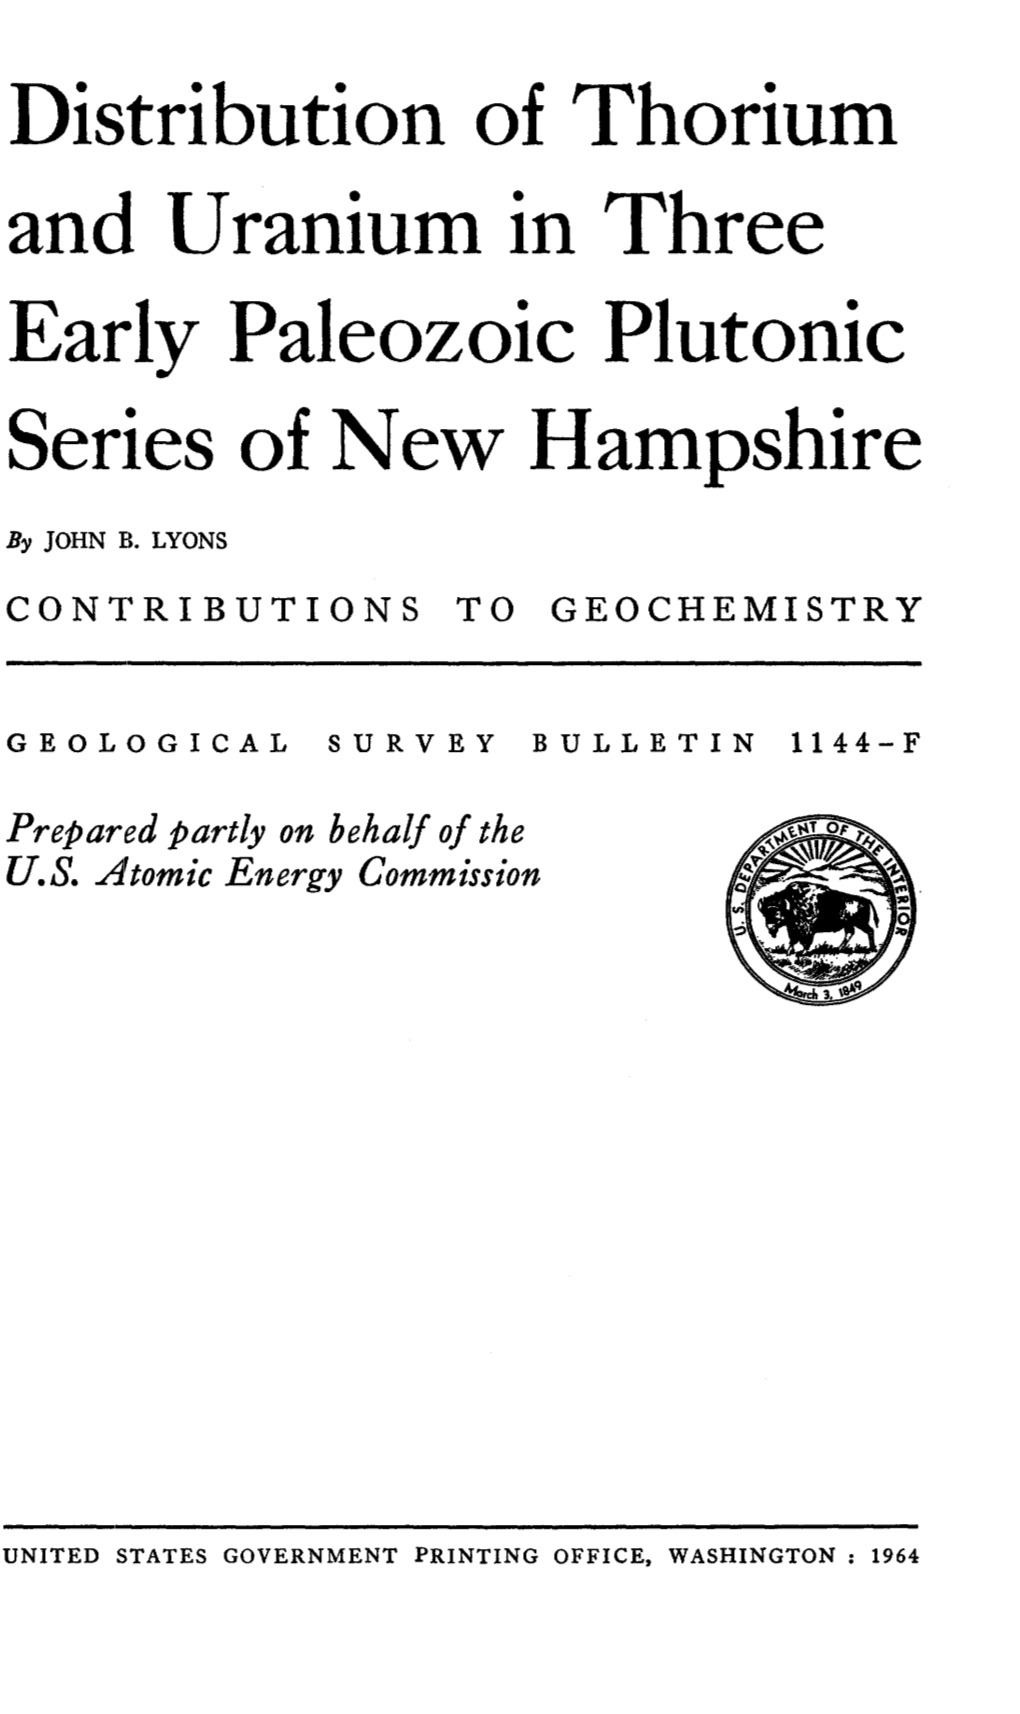 Distribution of Thorium and Uranium in Three Early Paleozoic Plutonic Series of New Hampshire